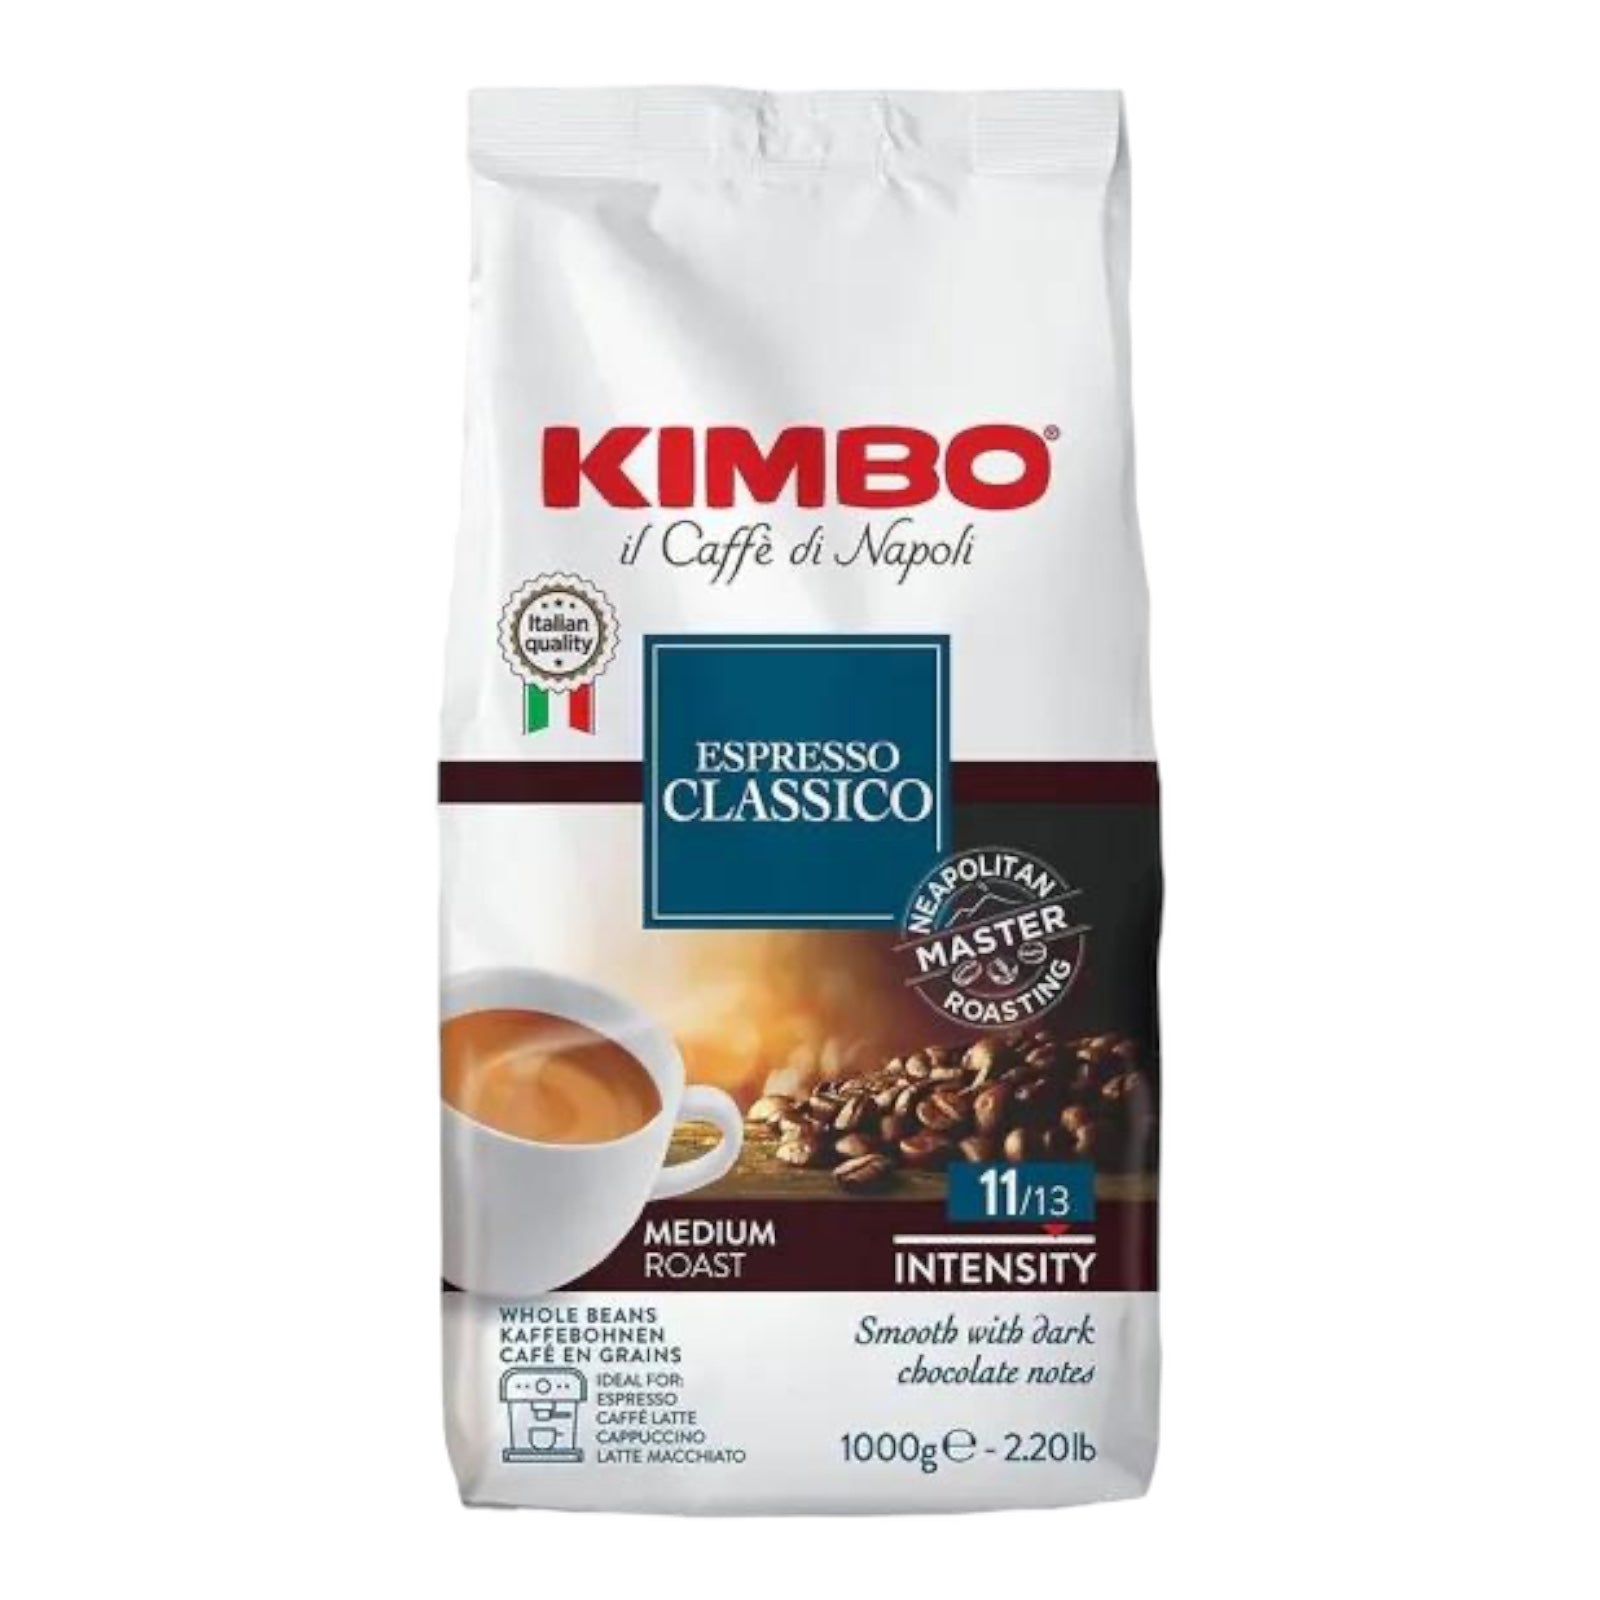 Kimbo Espresso Classic Whole Beans 2.2lb